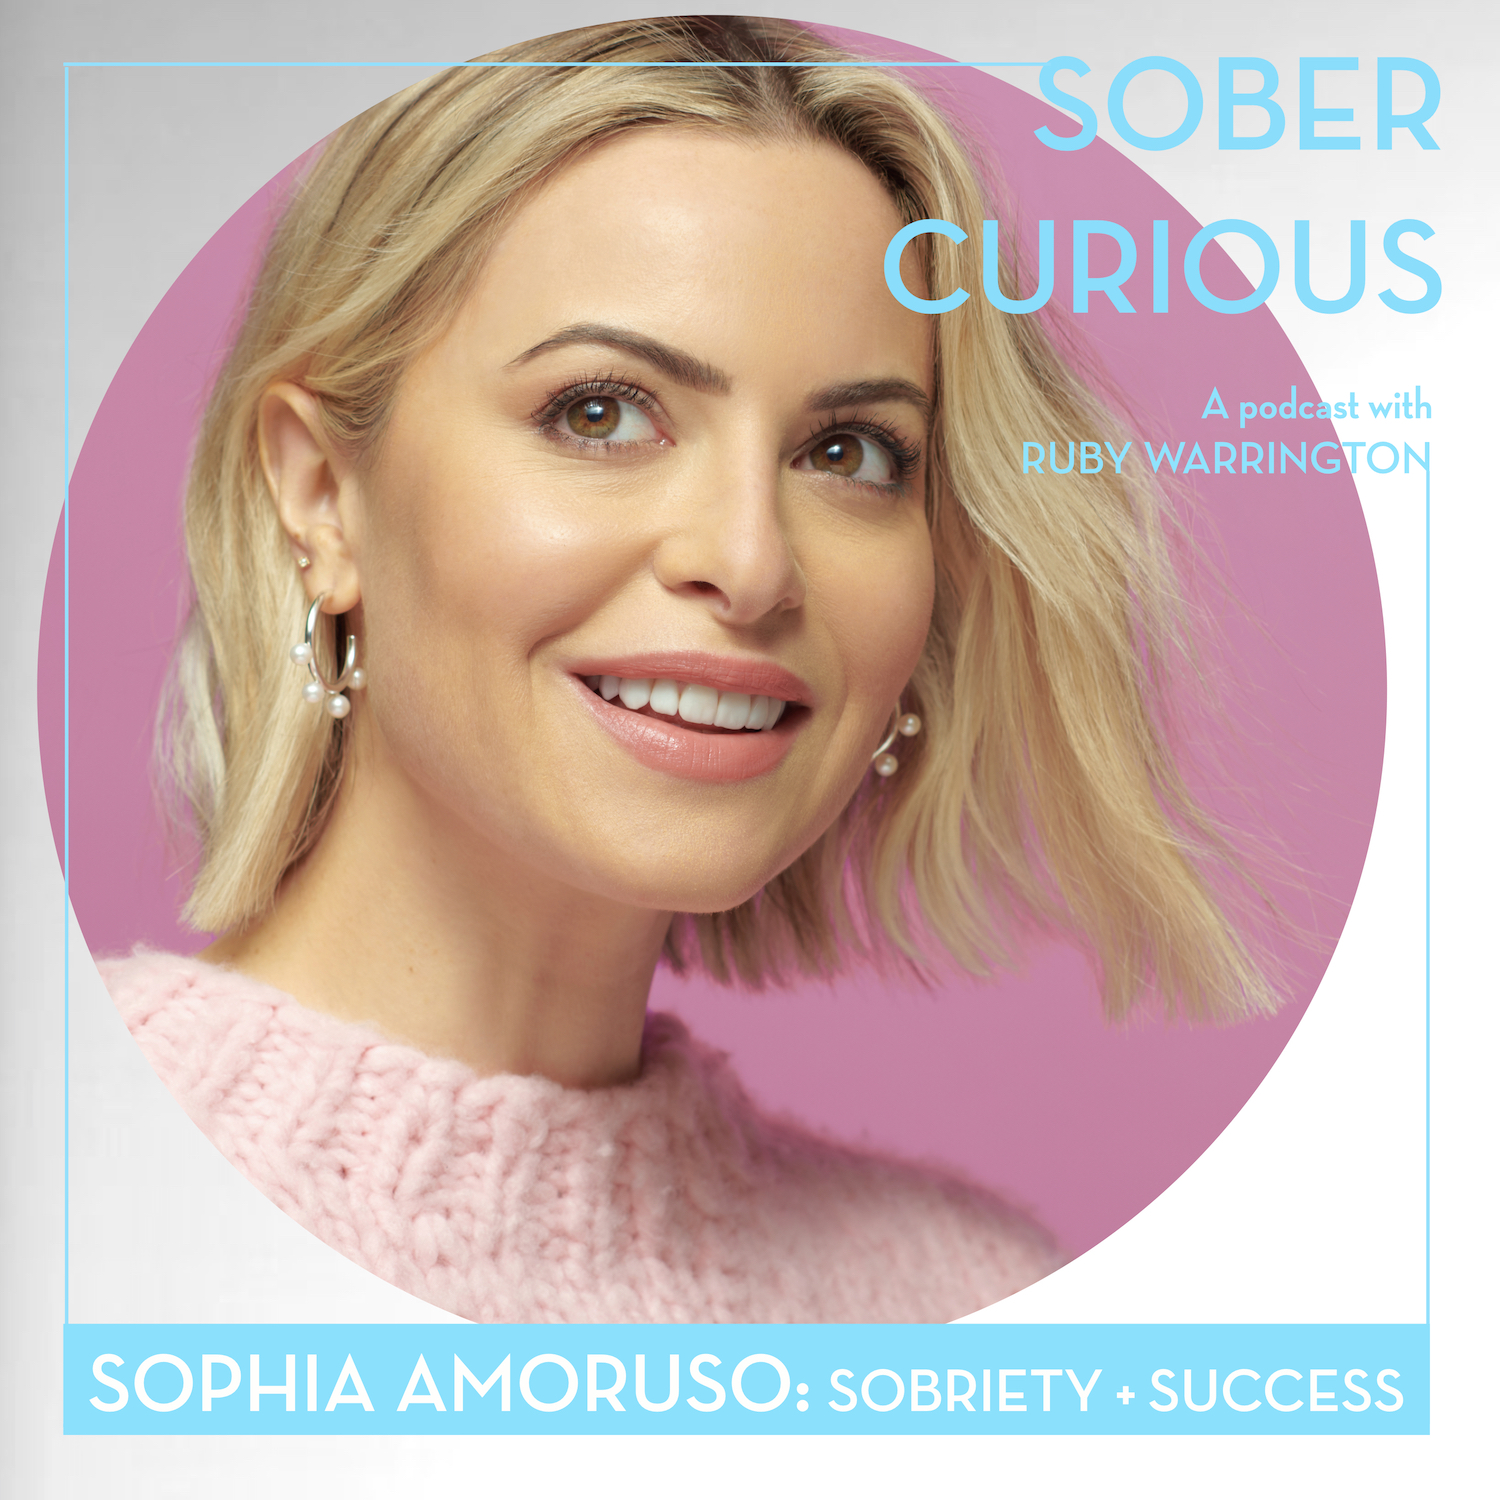 Sophia Amoruso Sober Curious podcast Ruby Warrington